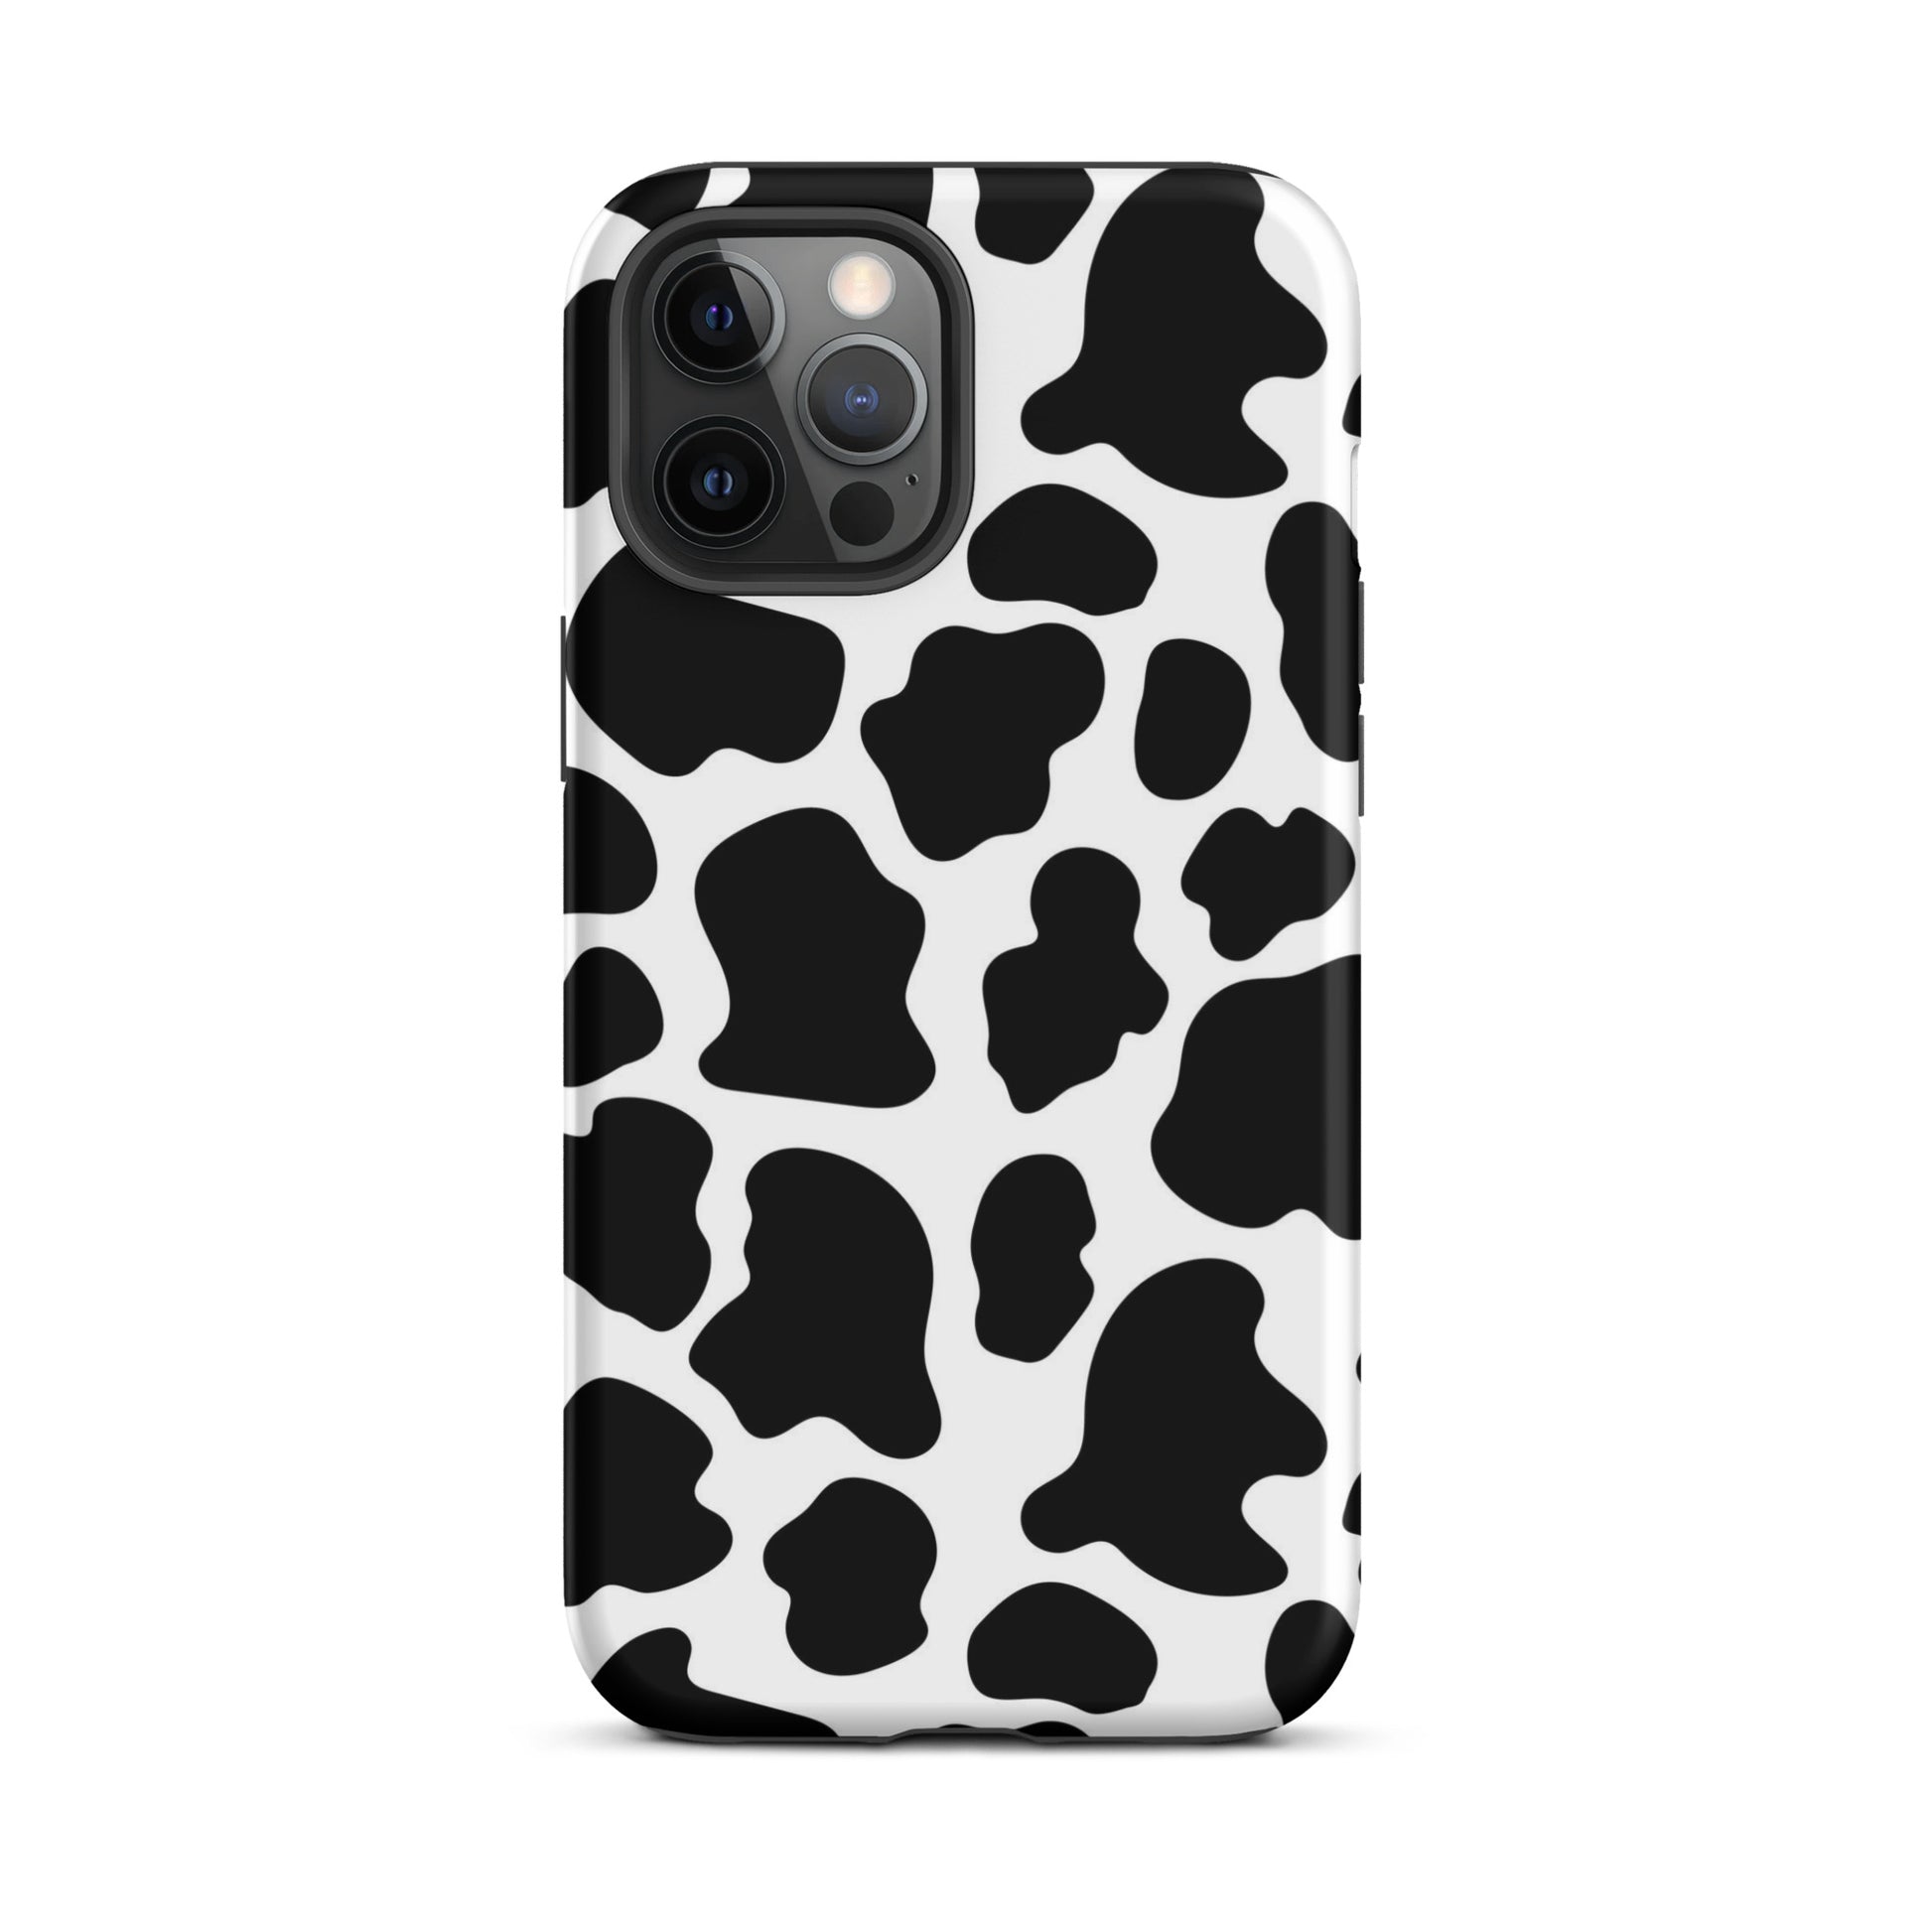 Cow Print iPhone Case iPhone 12 Pro Max Matte